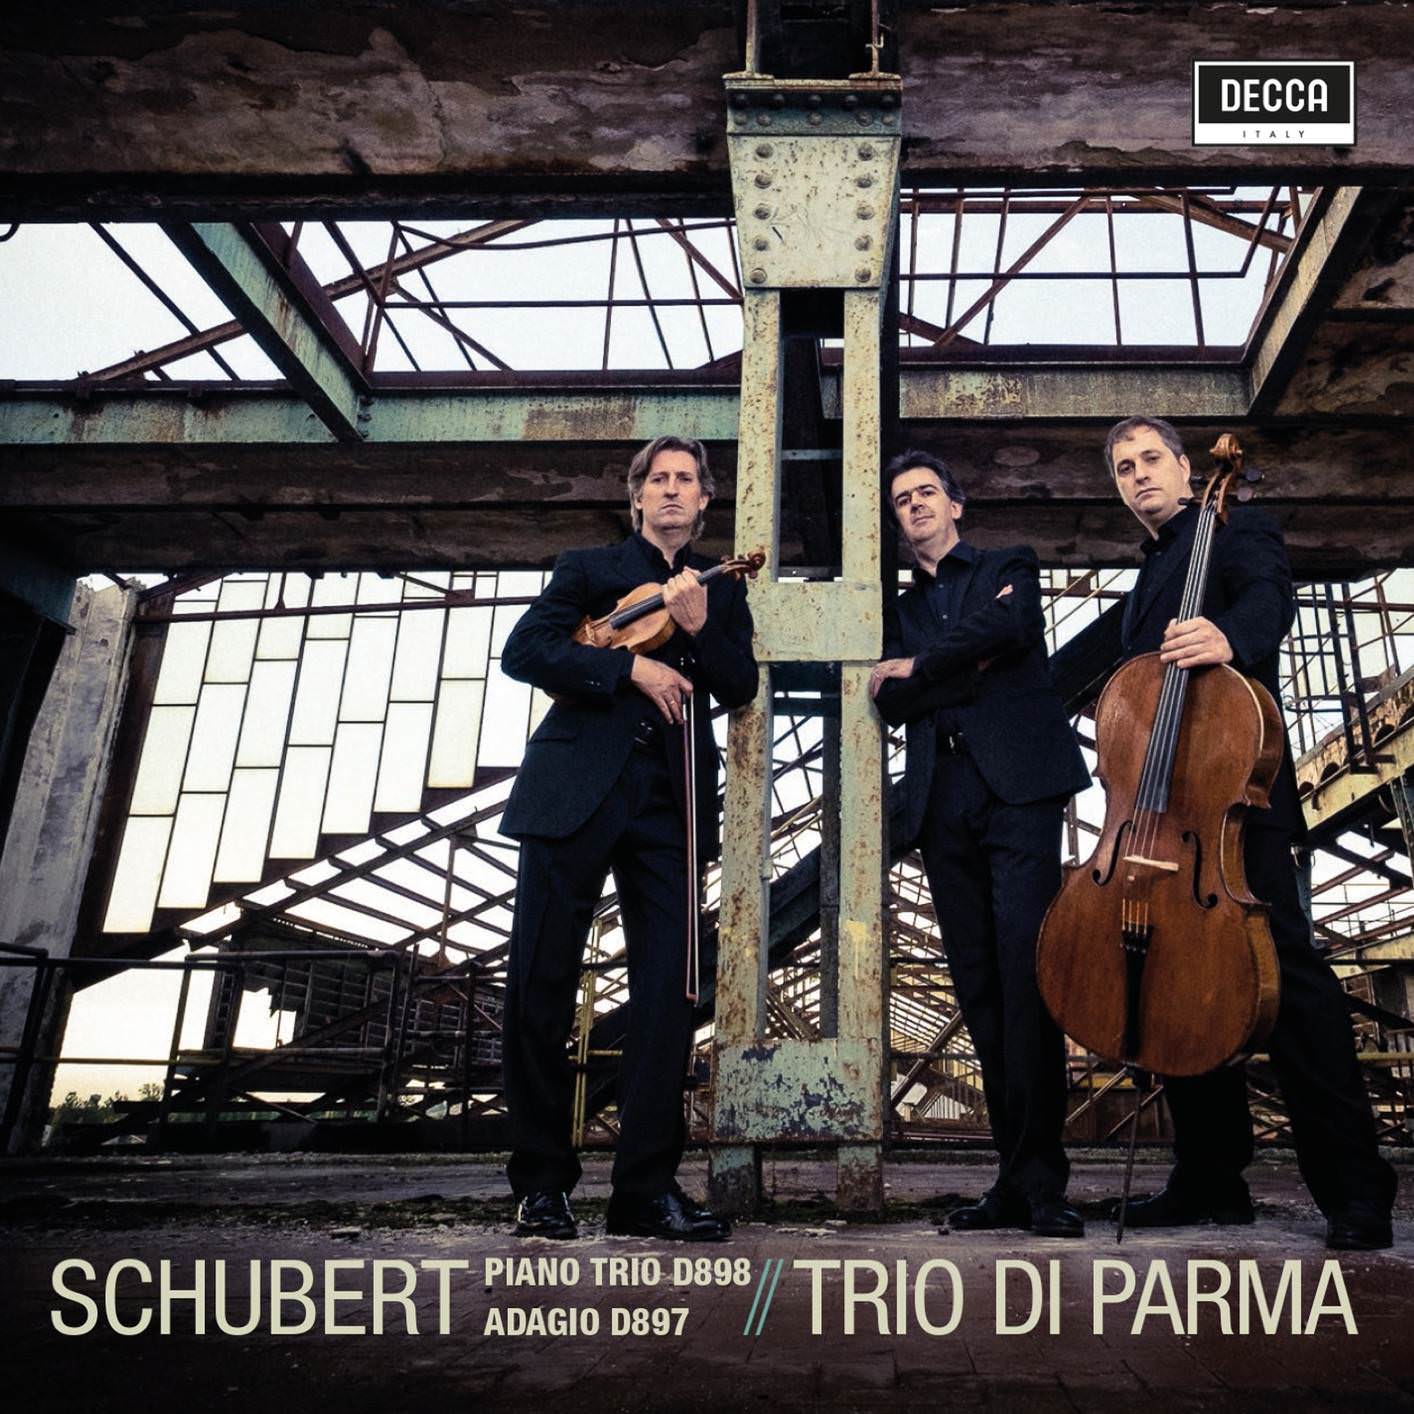 Trio di Parma - Schubert: Piano Trio D 898 - Adagio D 897 (2018) [FLAC 24bit/96kHz]